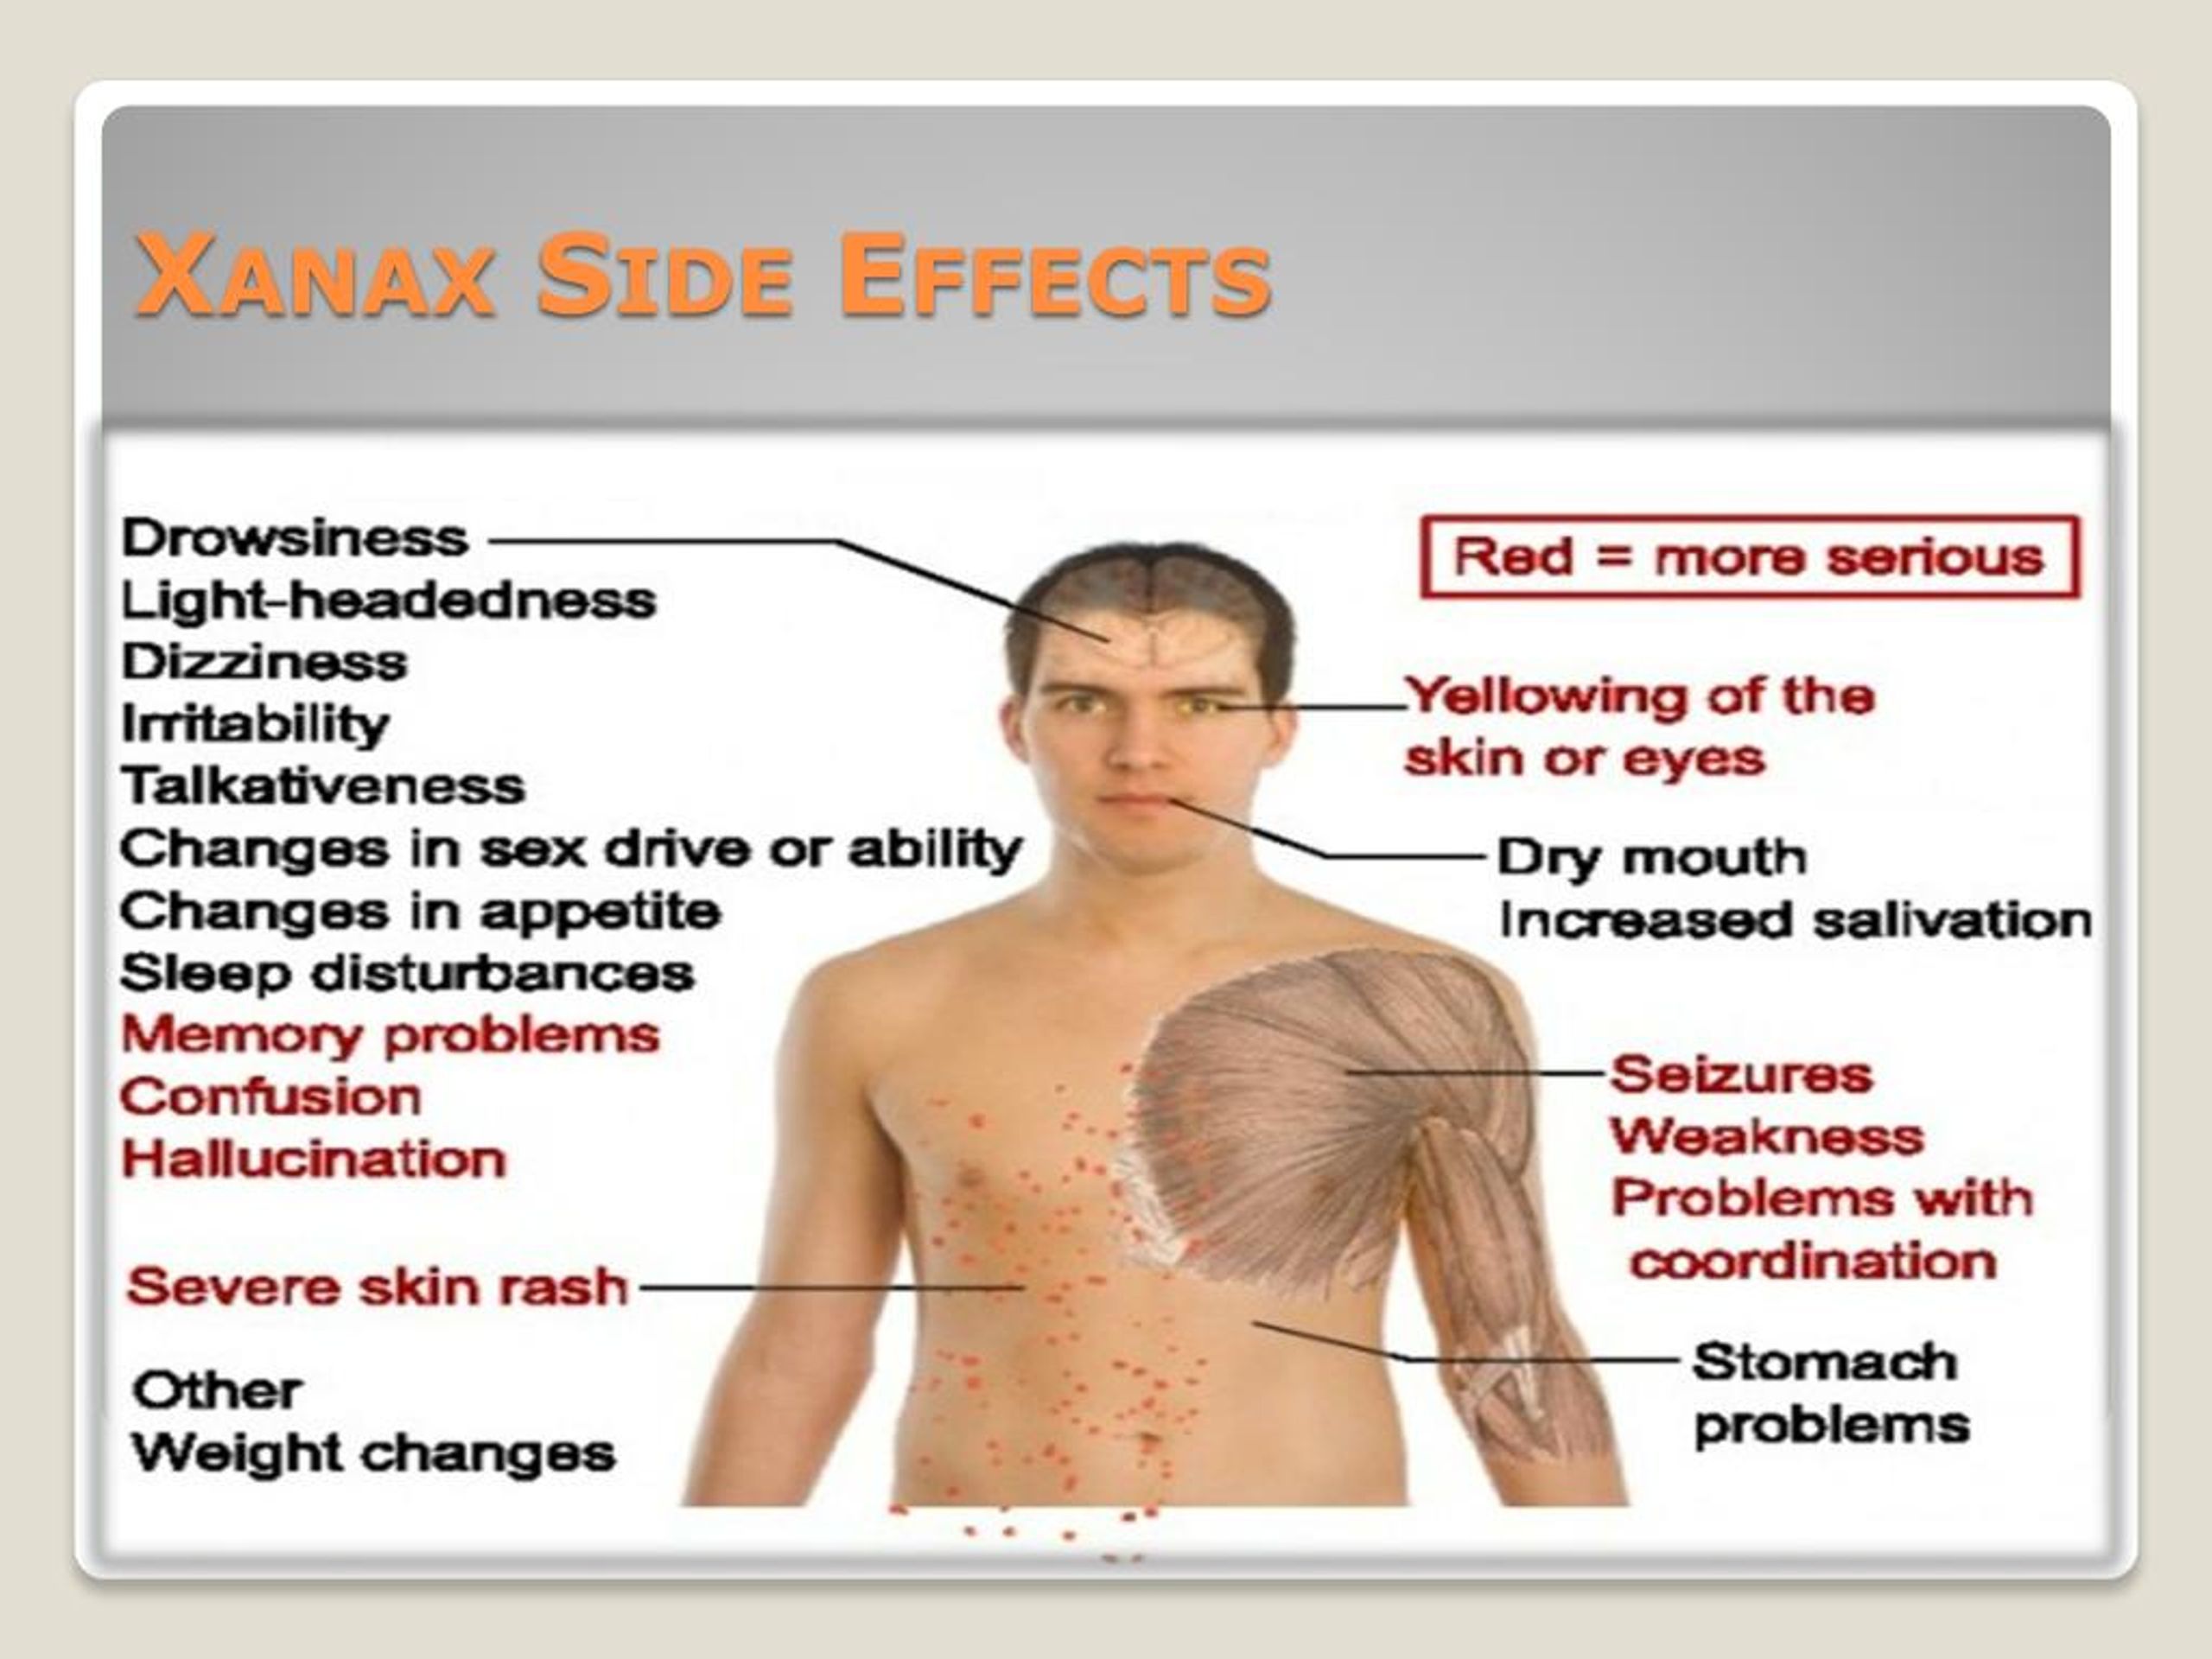 presentation of xanax